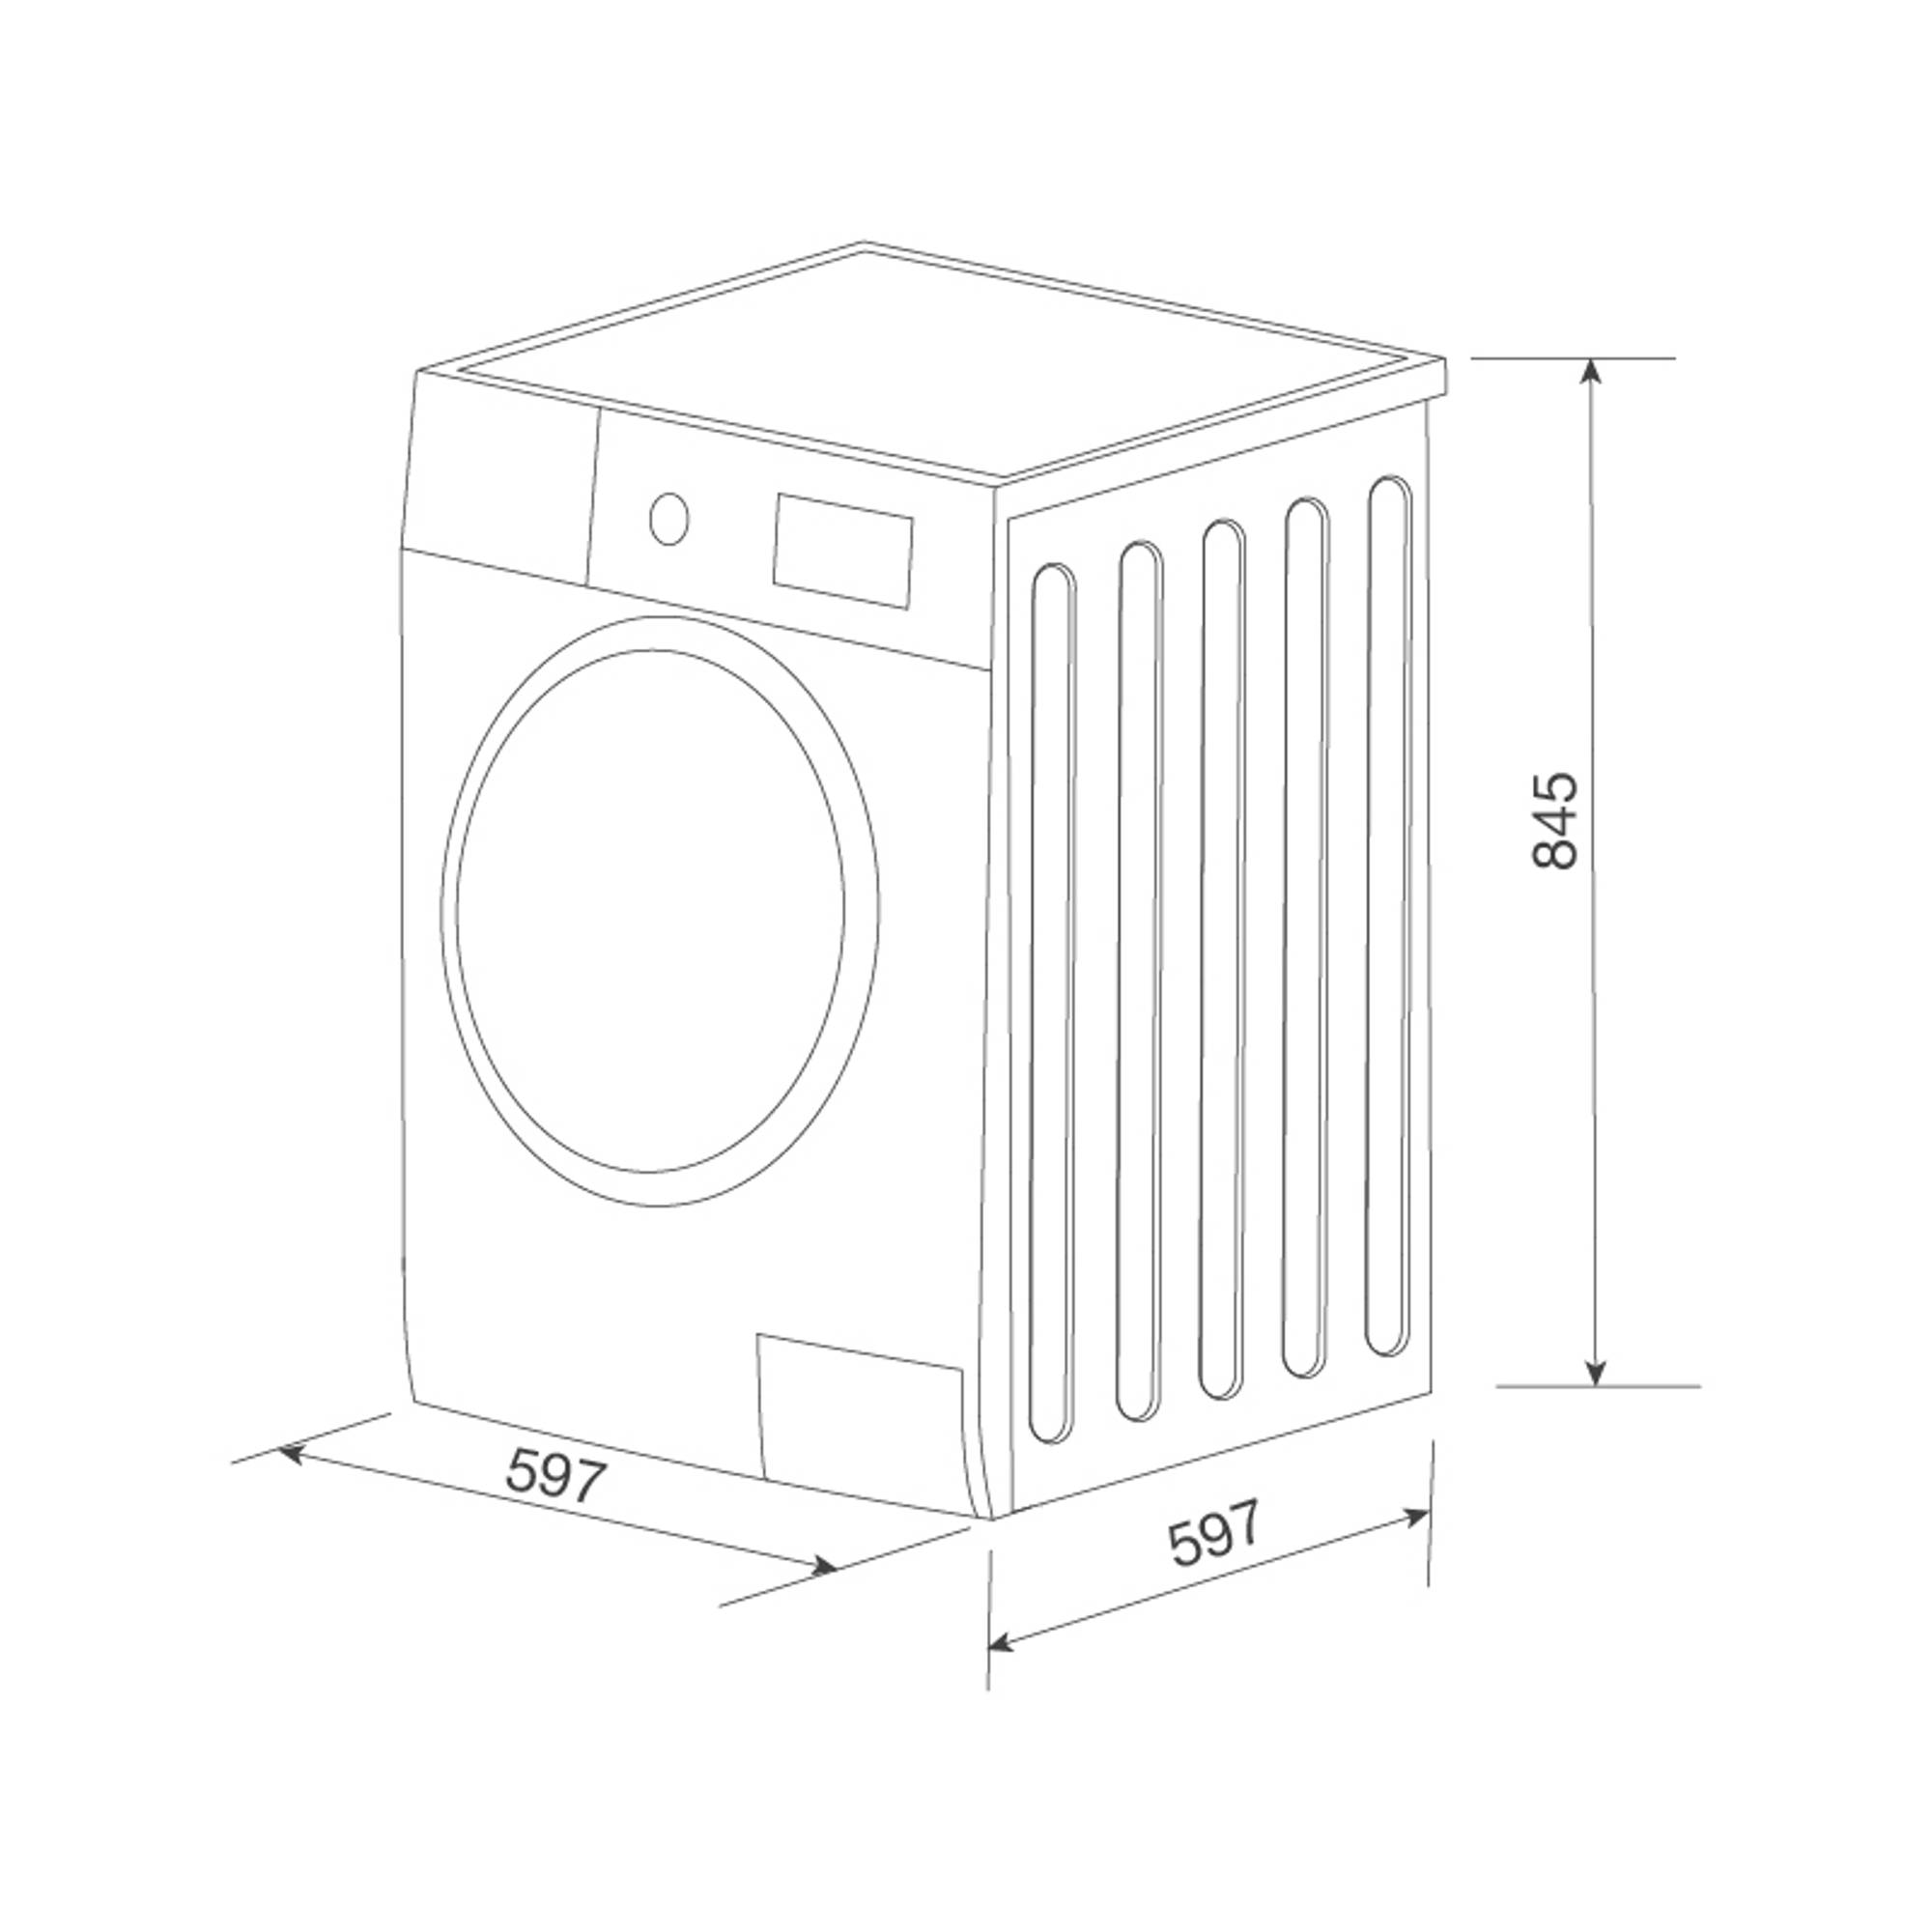 Máy giặt quần áo MWM-T1510BL